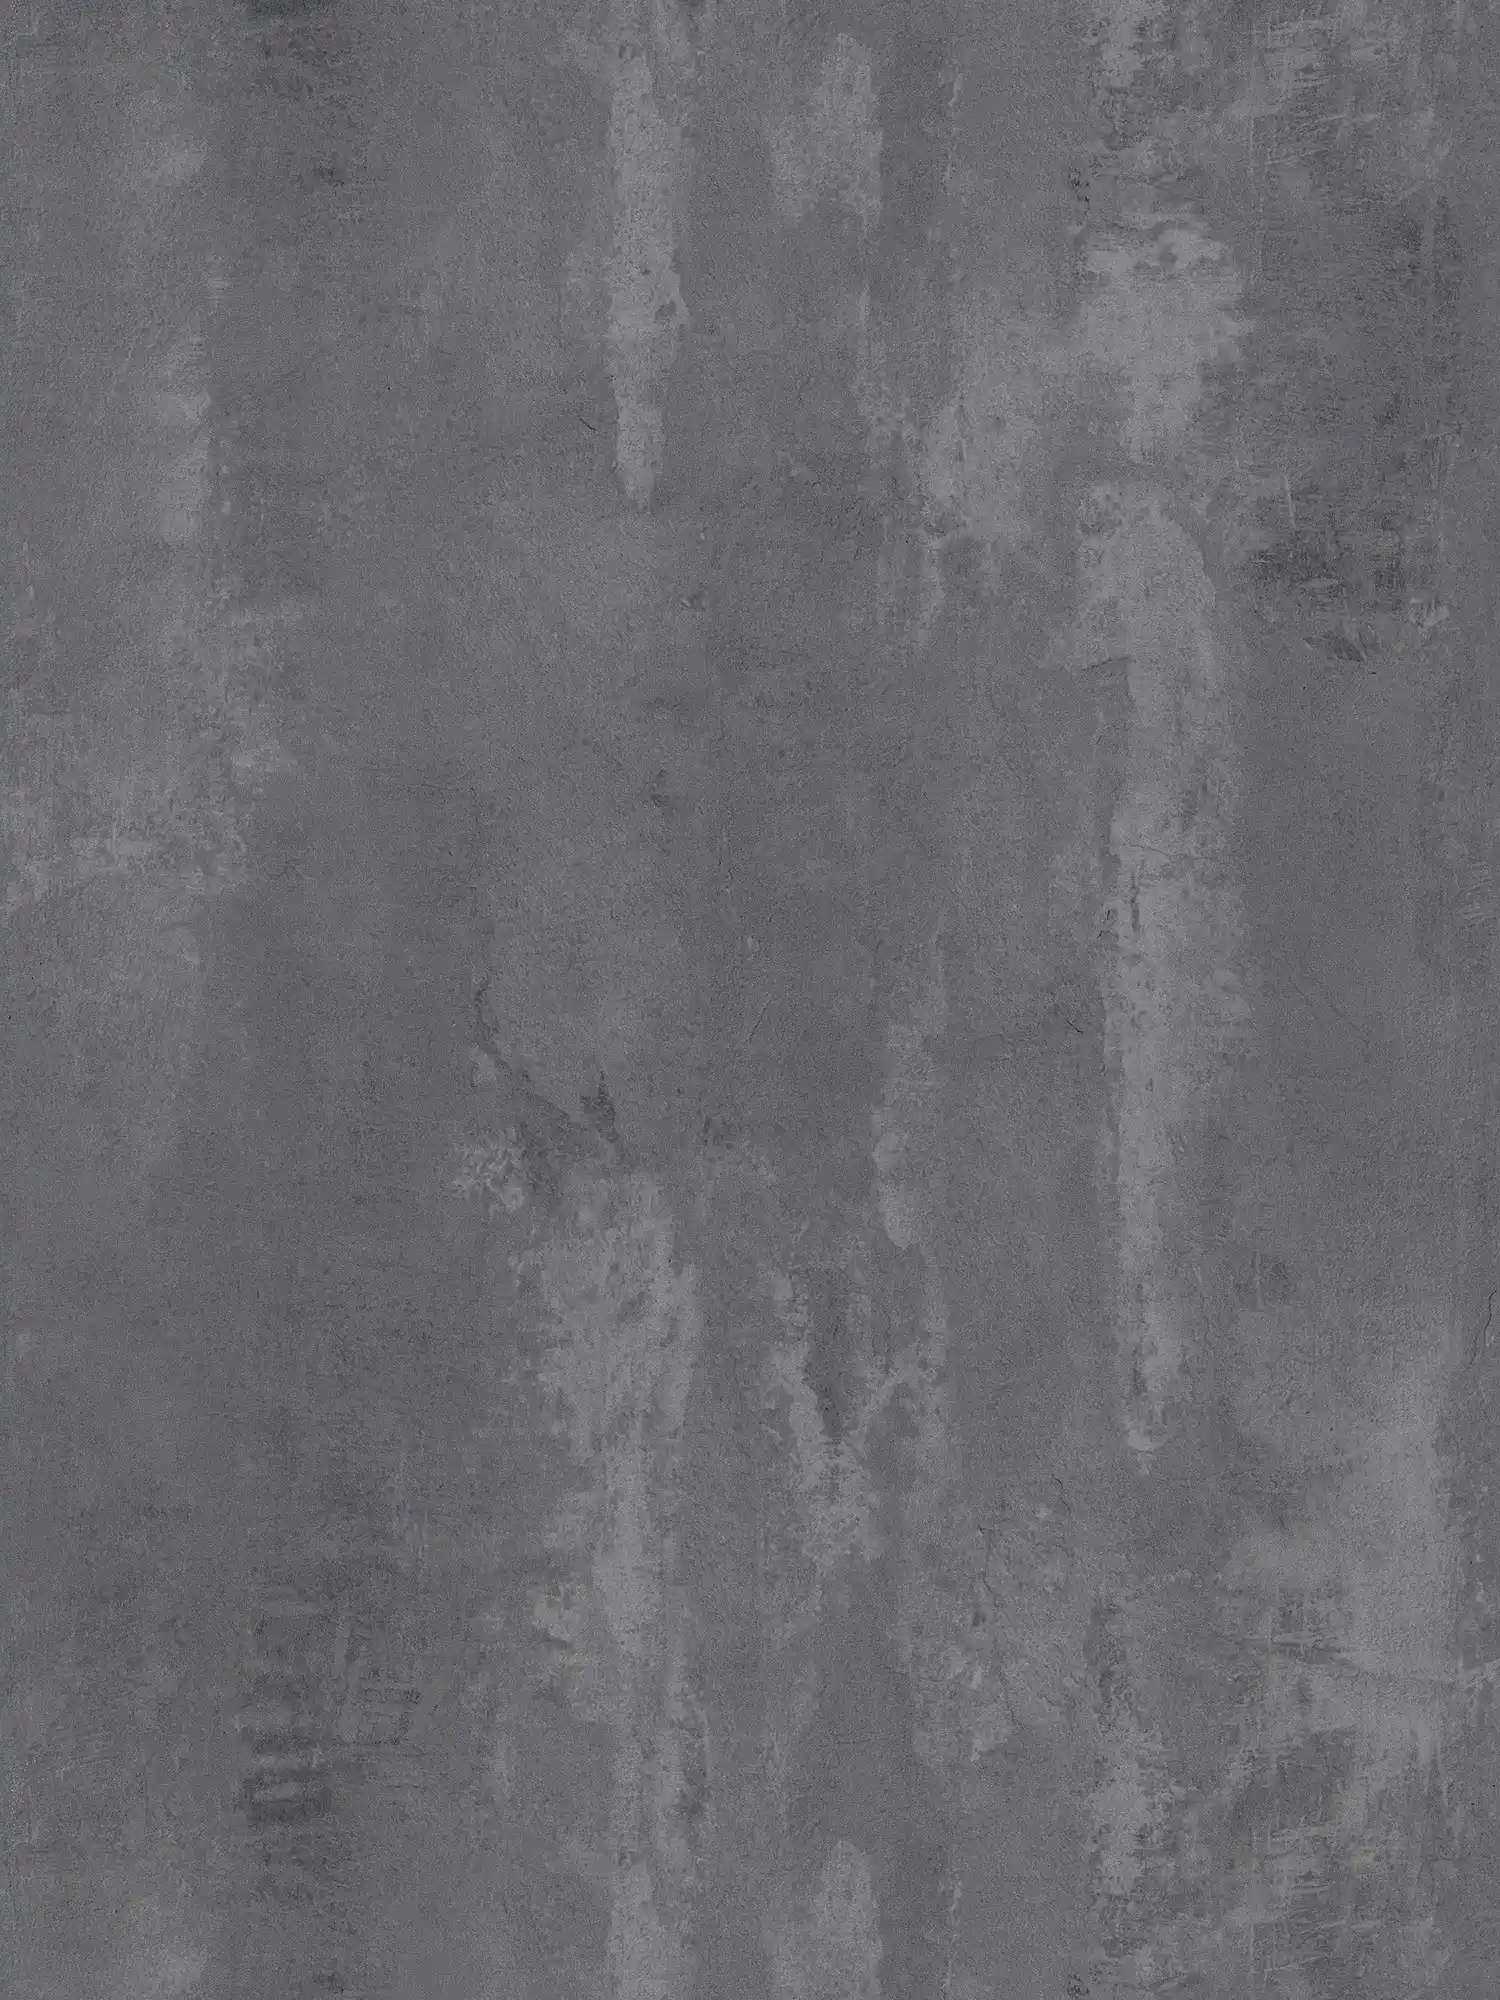         Papel pintado de hormigón oscuro de estilo rústico e industrial - gris
    